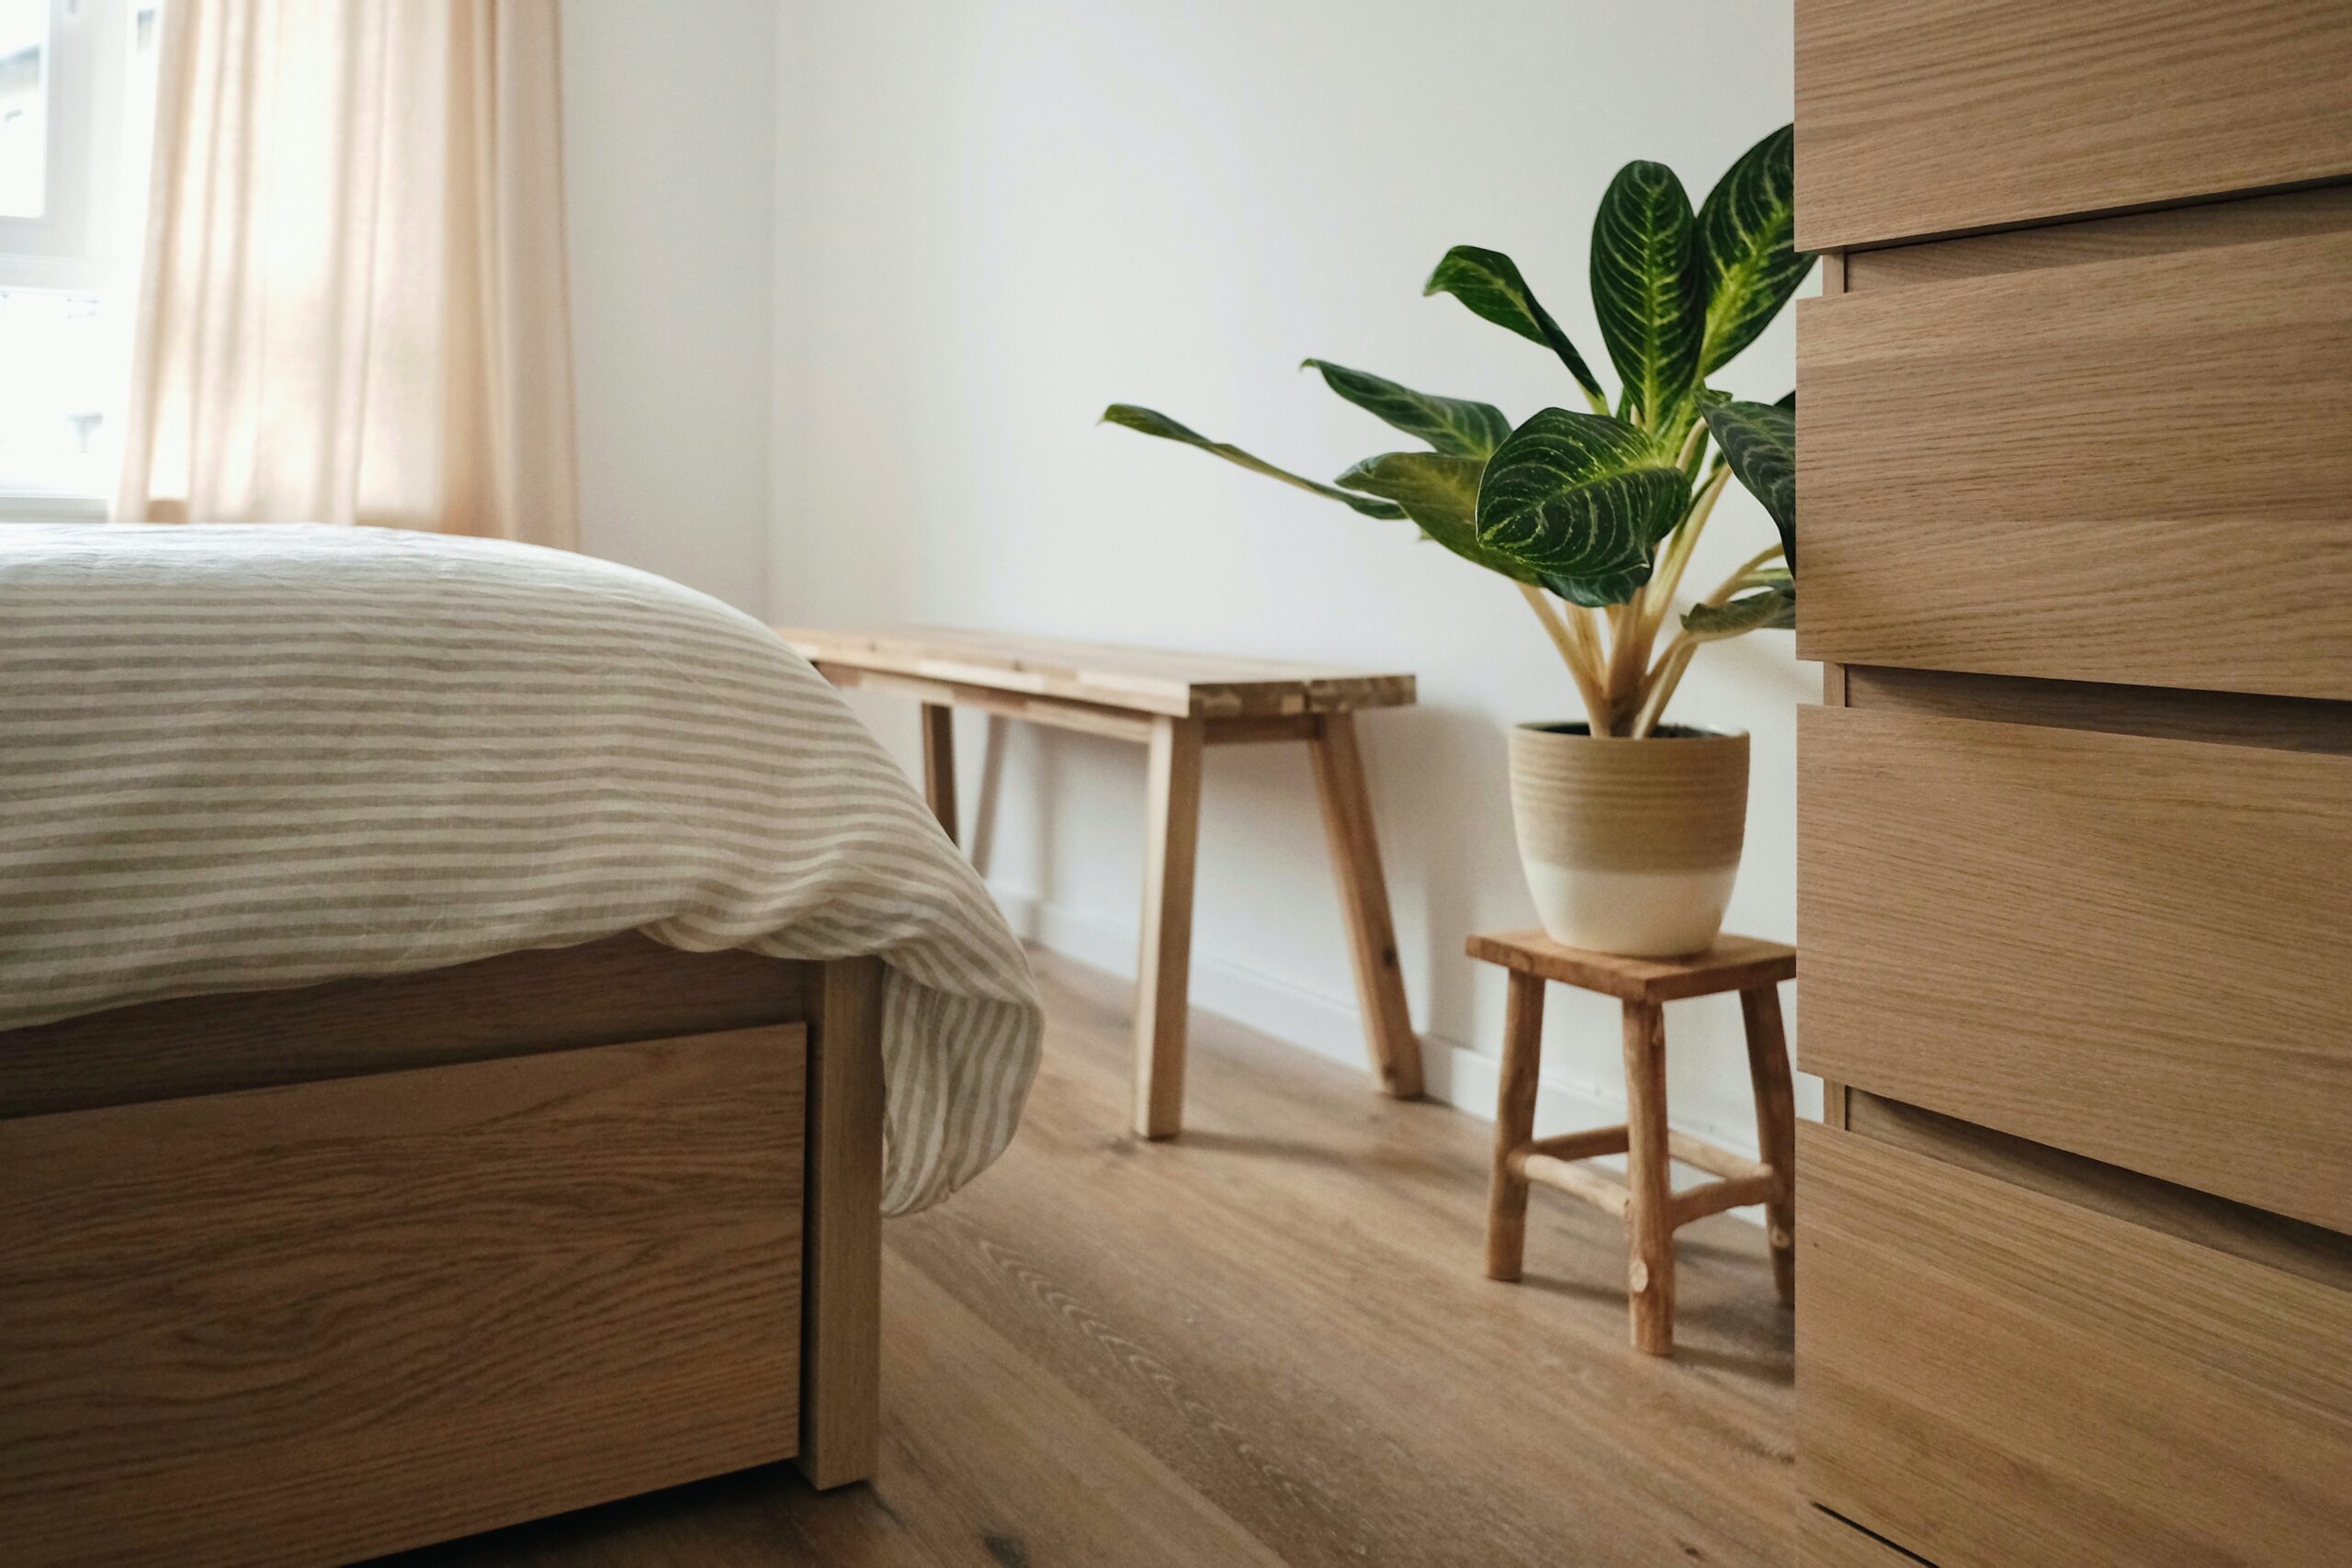 Japanese Bedroom Zen Design - 7 Principles for Minimalism